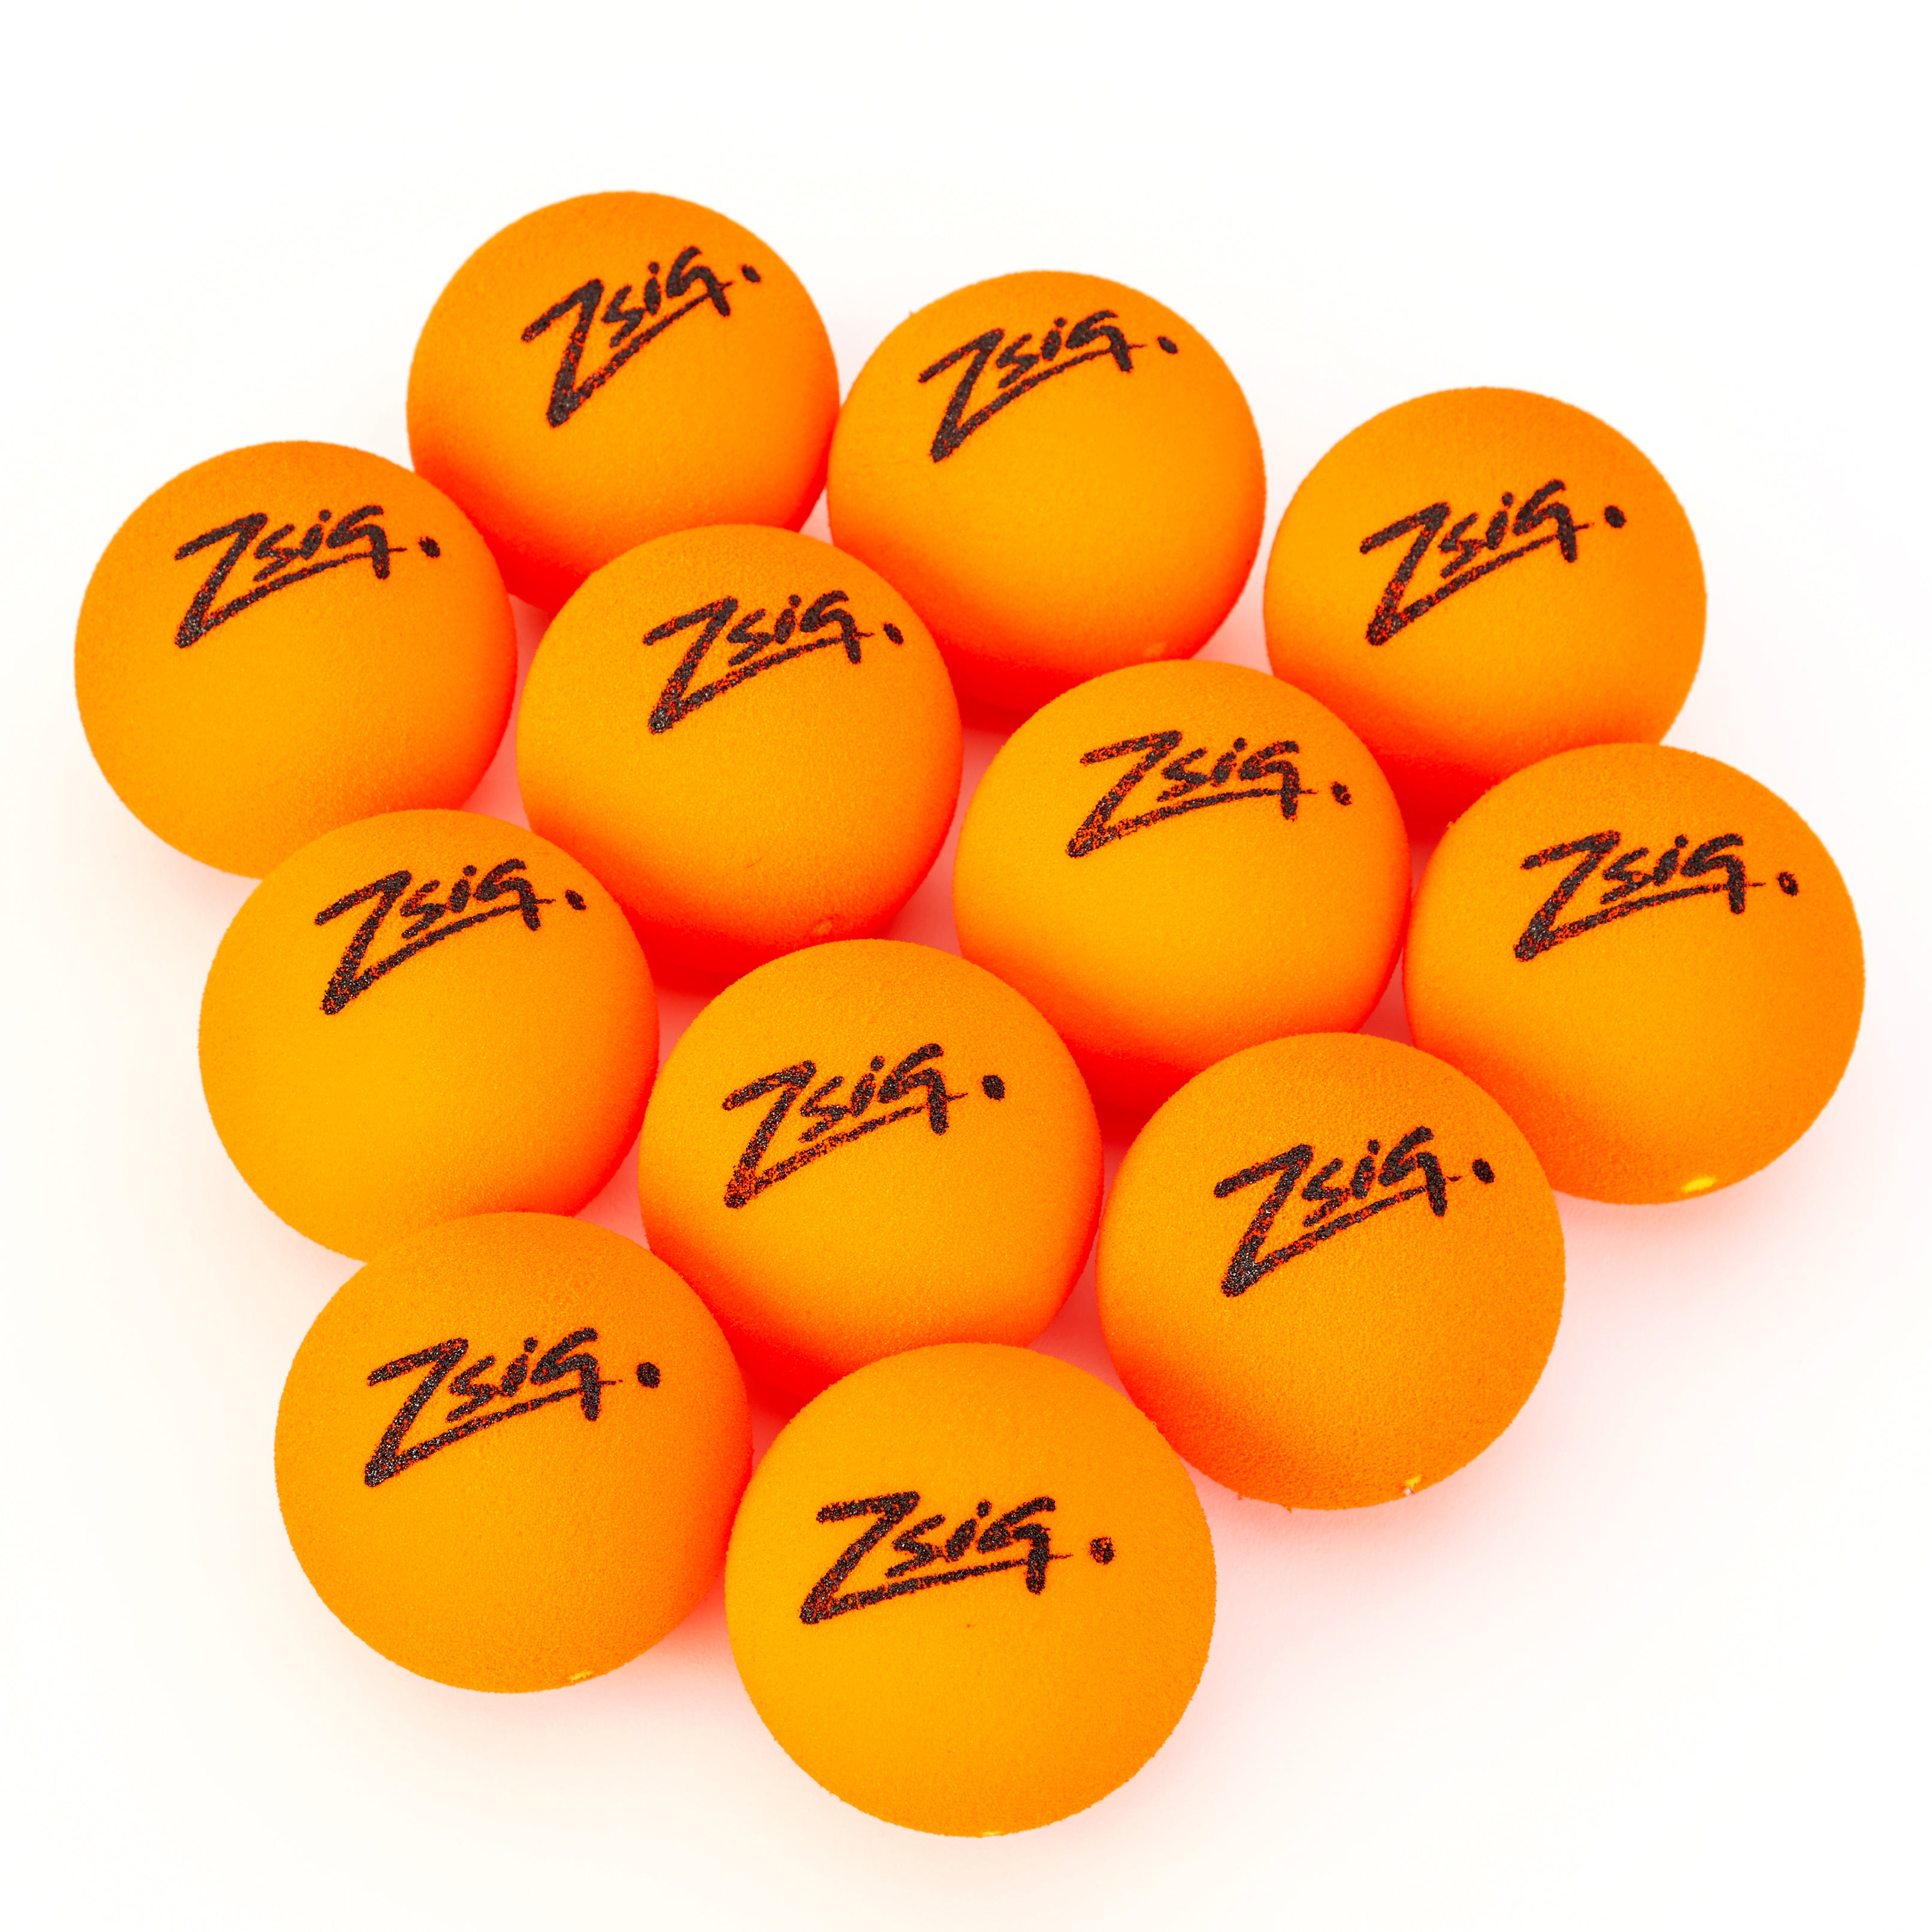 ZSig MP9 Tough Guy sponge ball in orange - a dozen